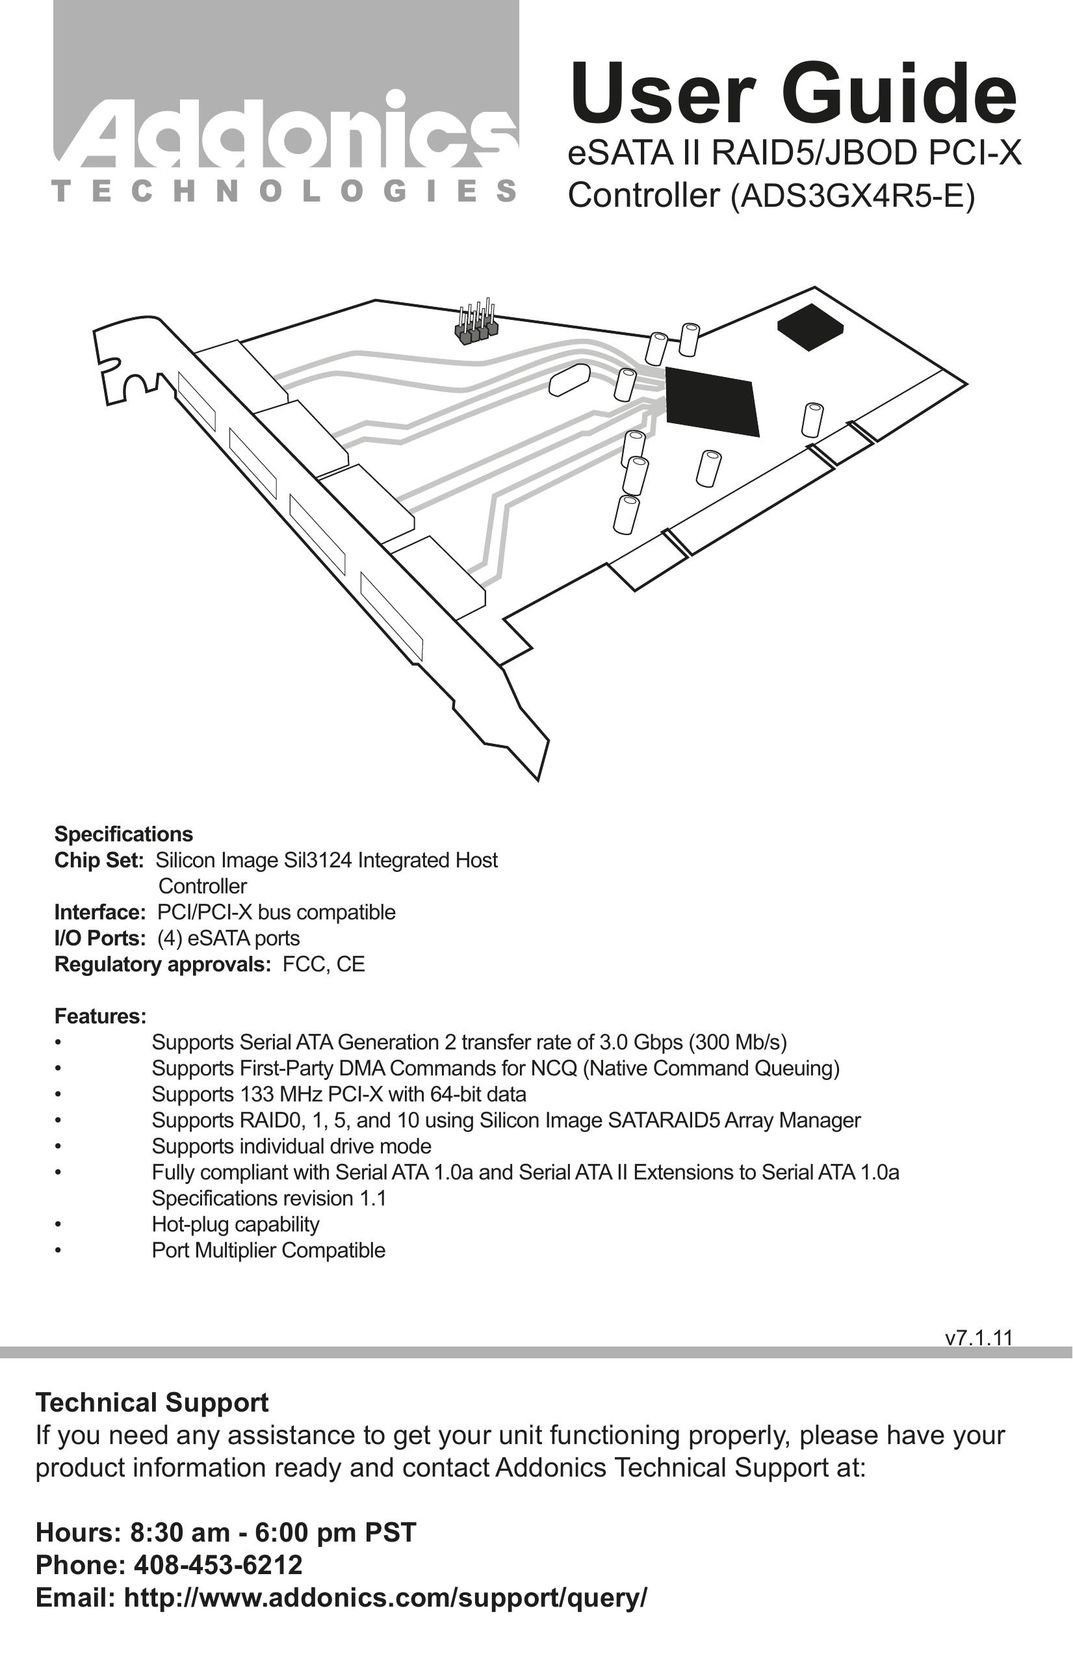 Addonics Technologies ADS3GX4R5-E Computer Hardware User Manual